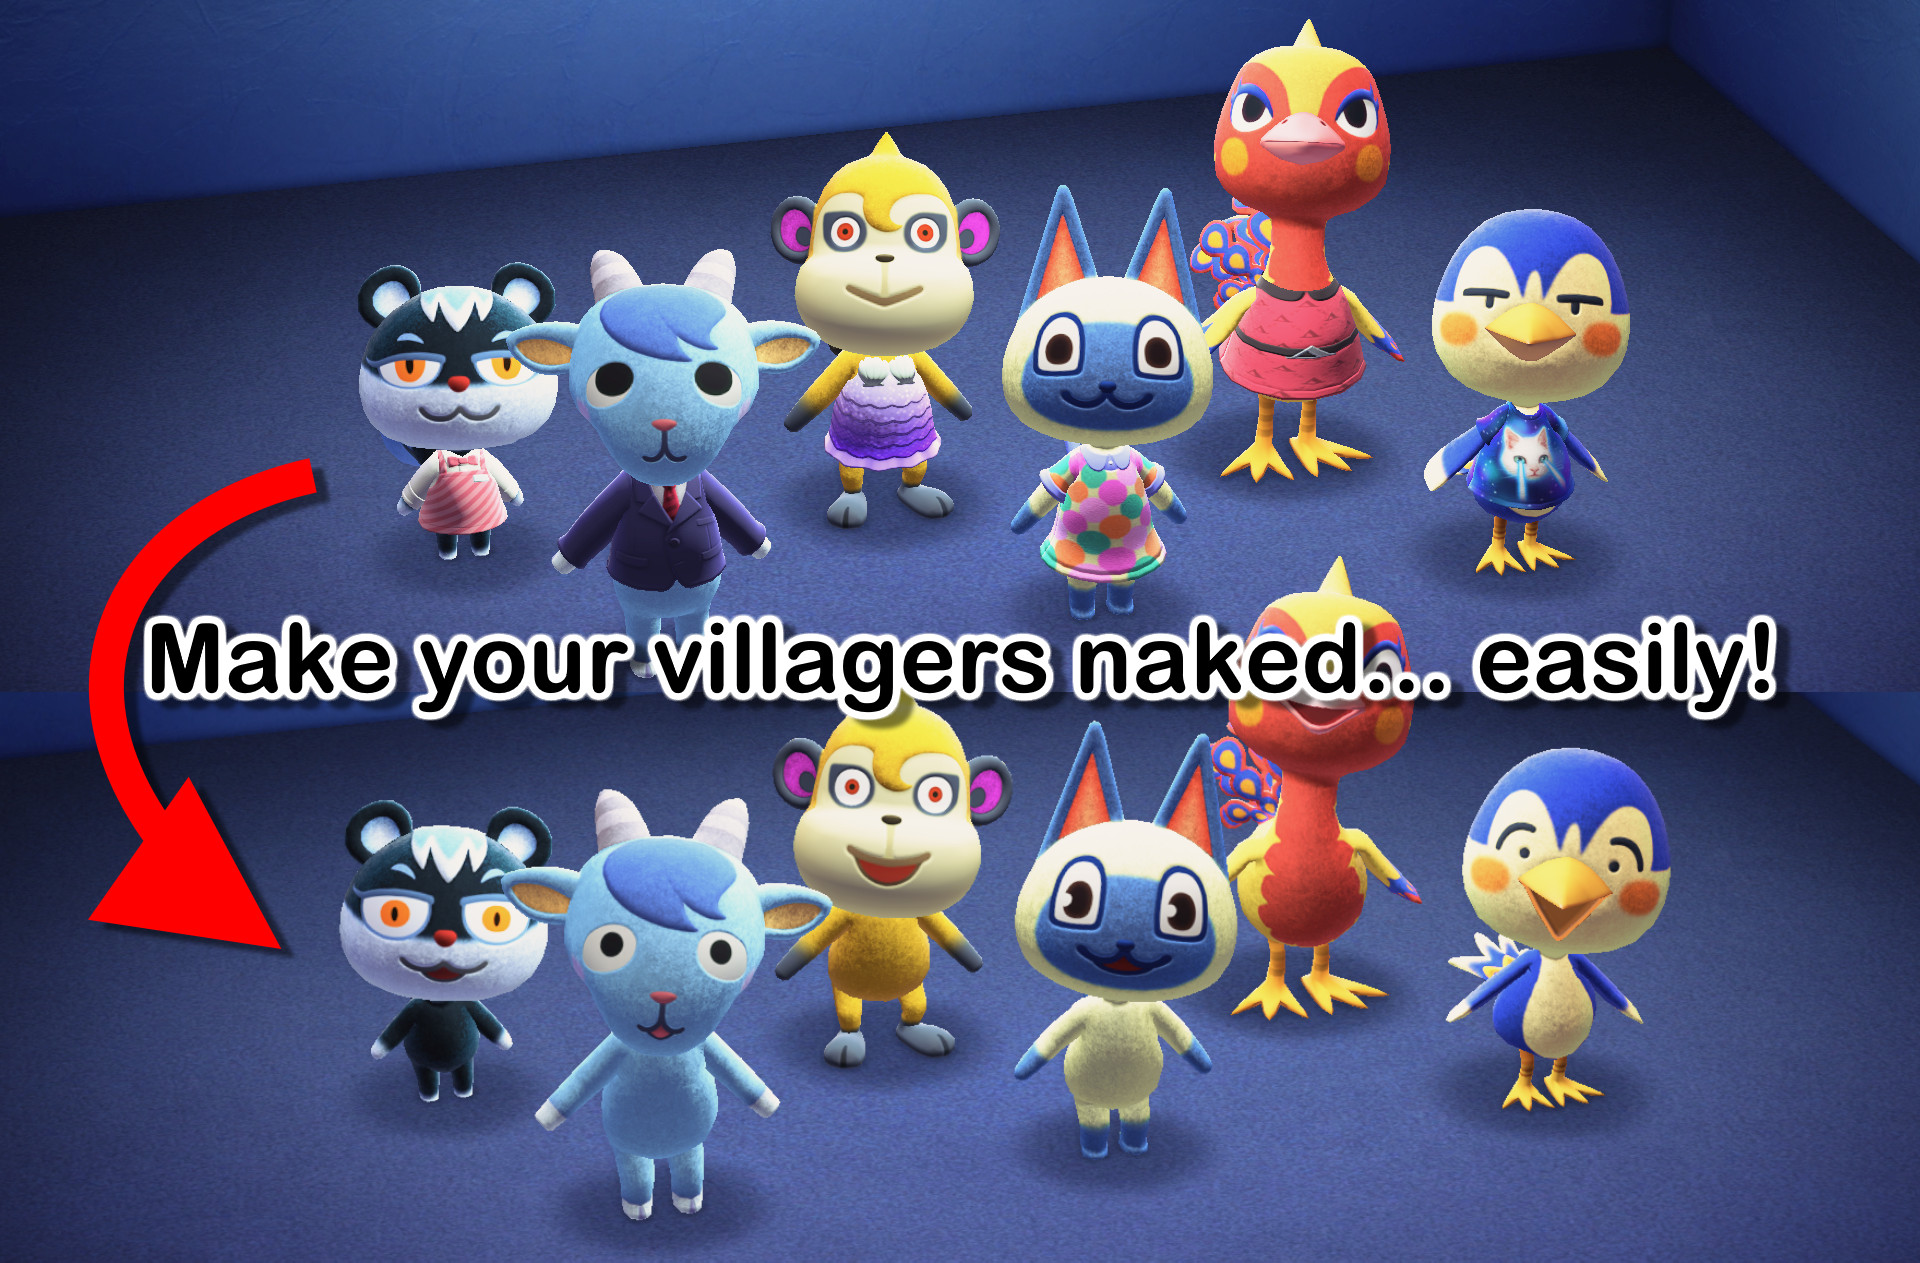 allen justin artates recommends Animal Crossing Nude